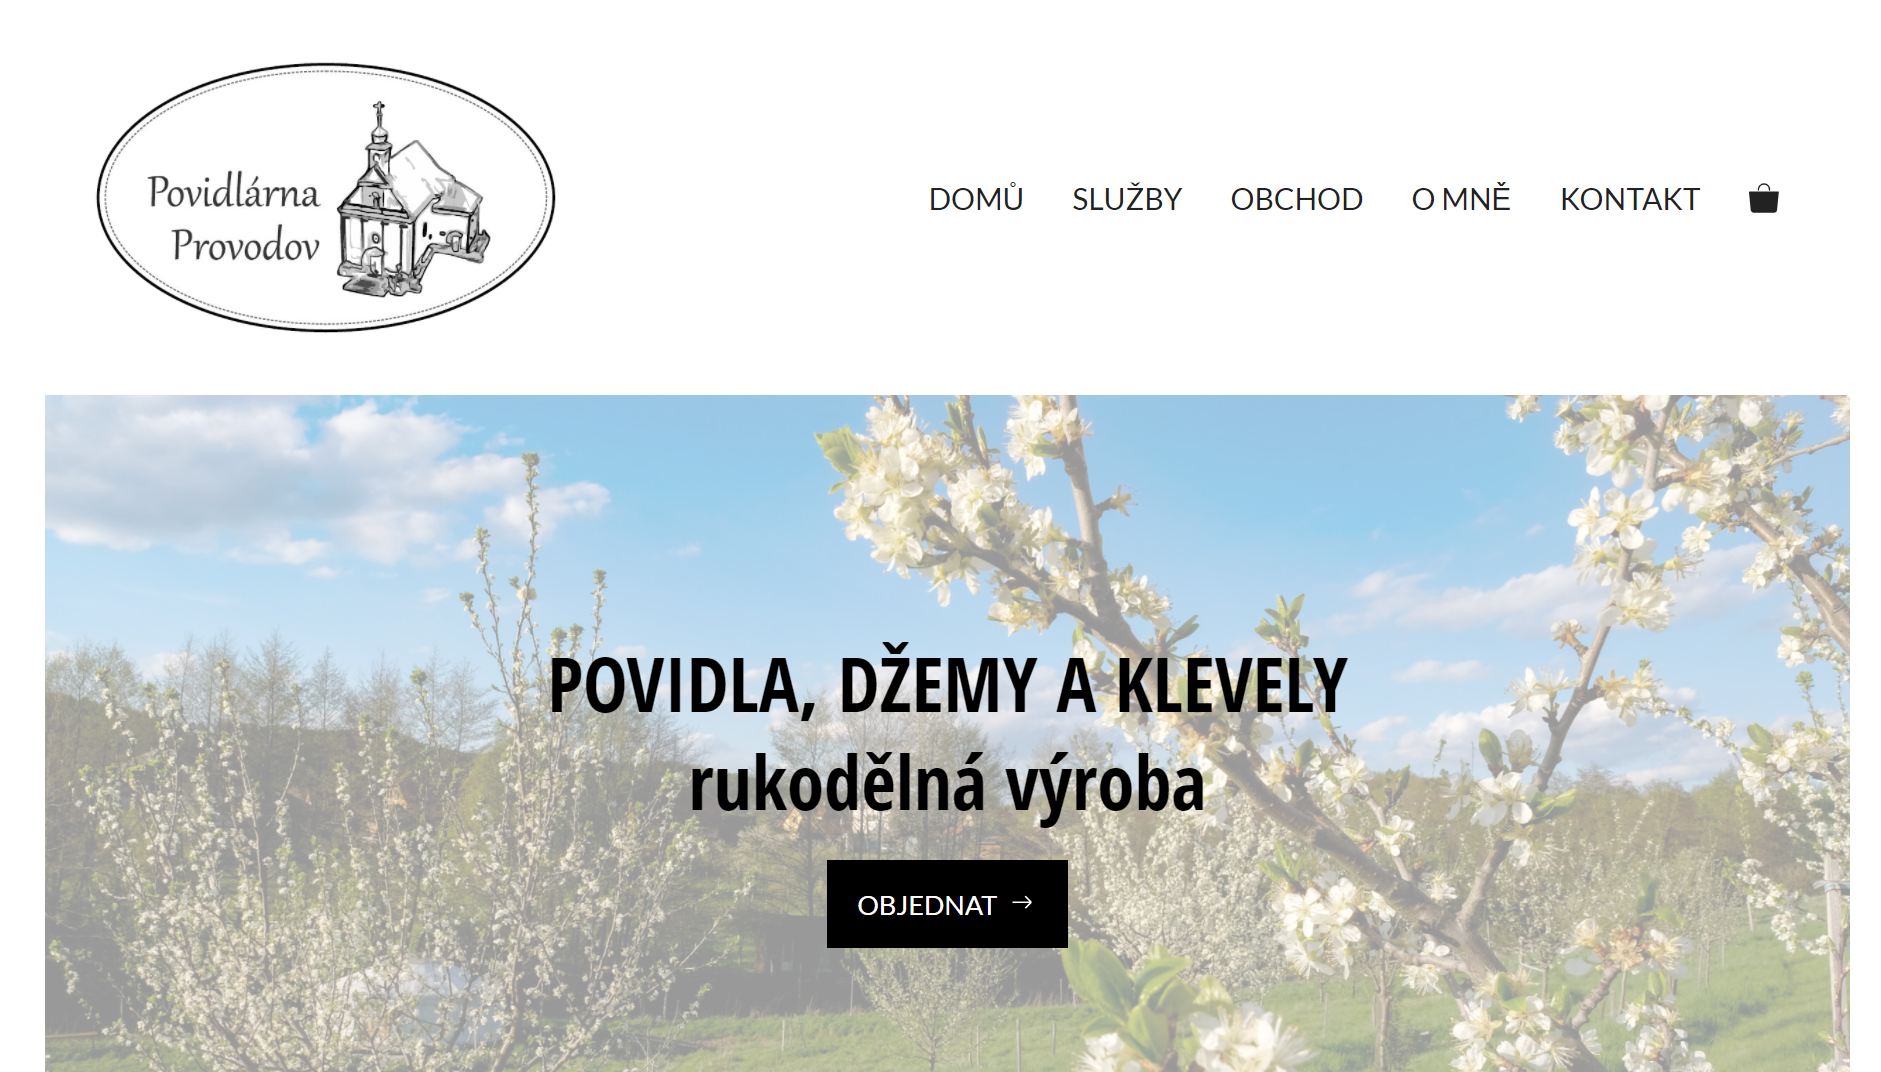 www.povidlarna-provodov.cz